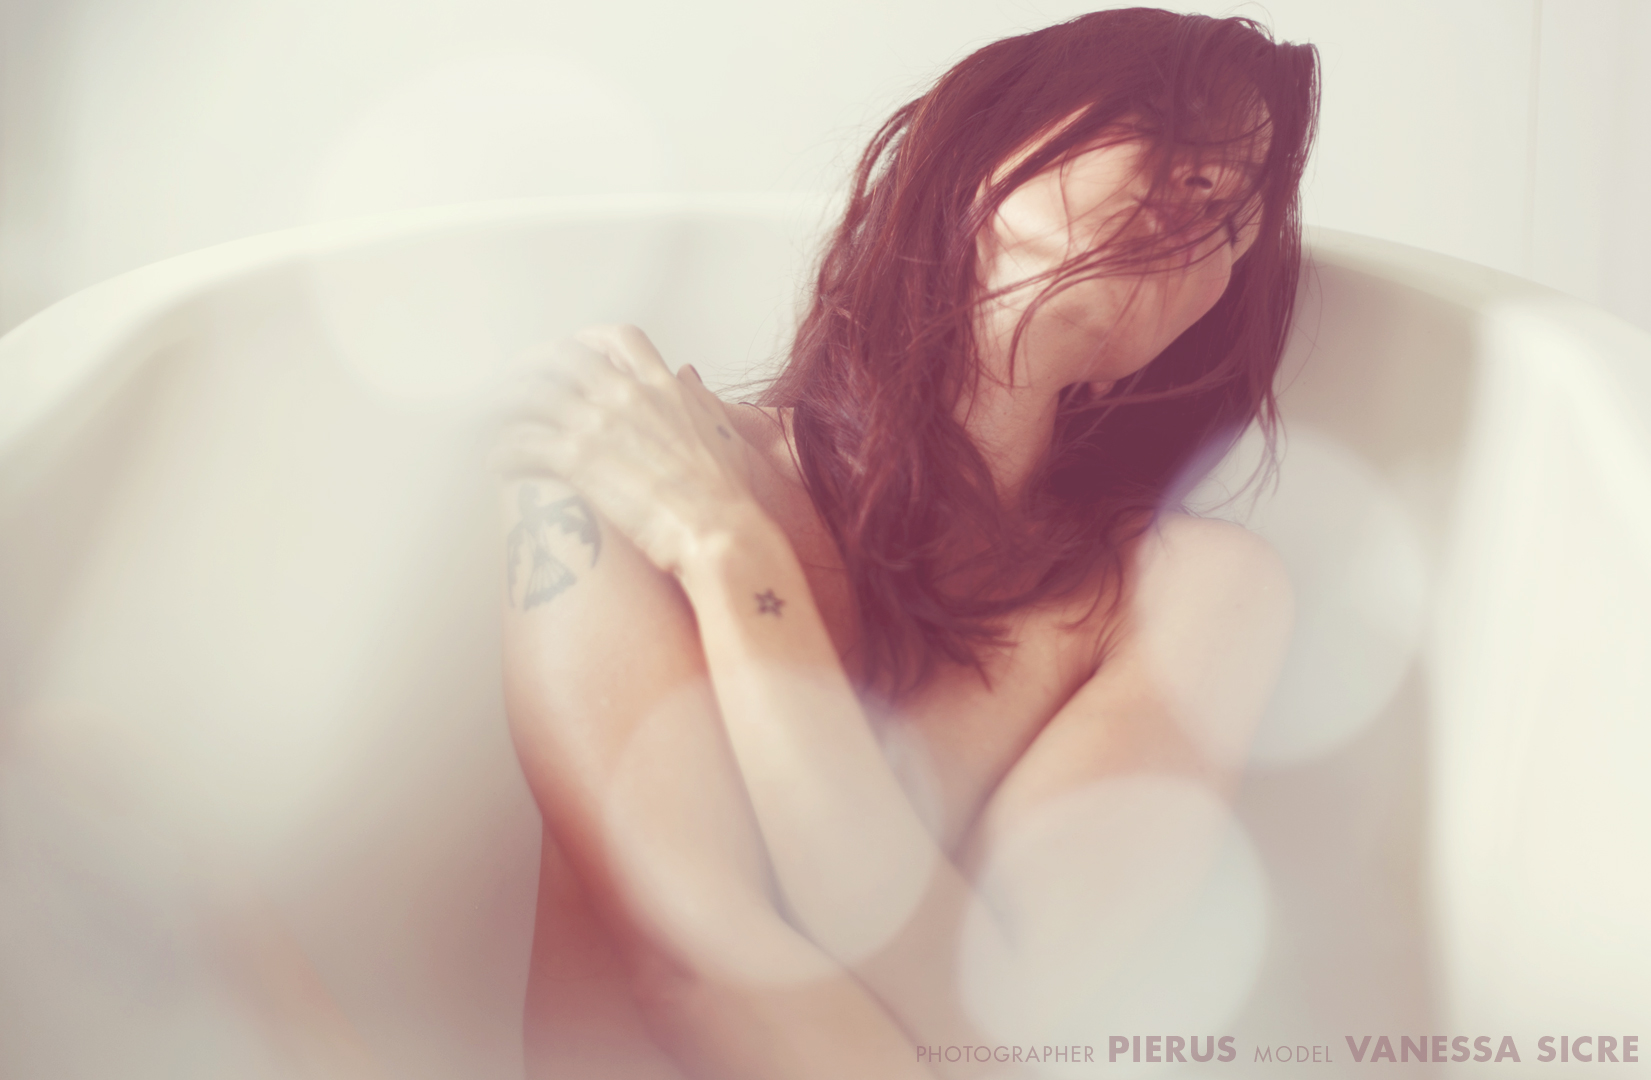 Model: Vanessa Sicre<br />
Photographer: Pierus